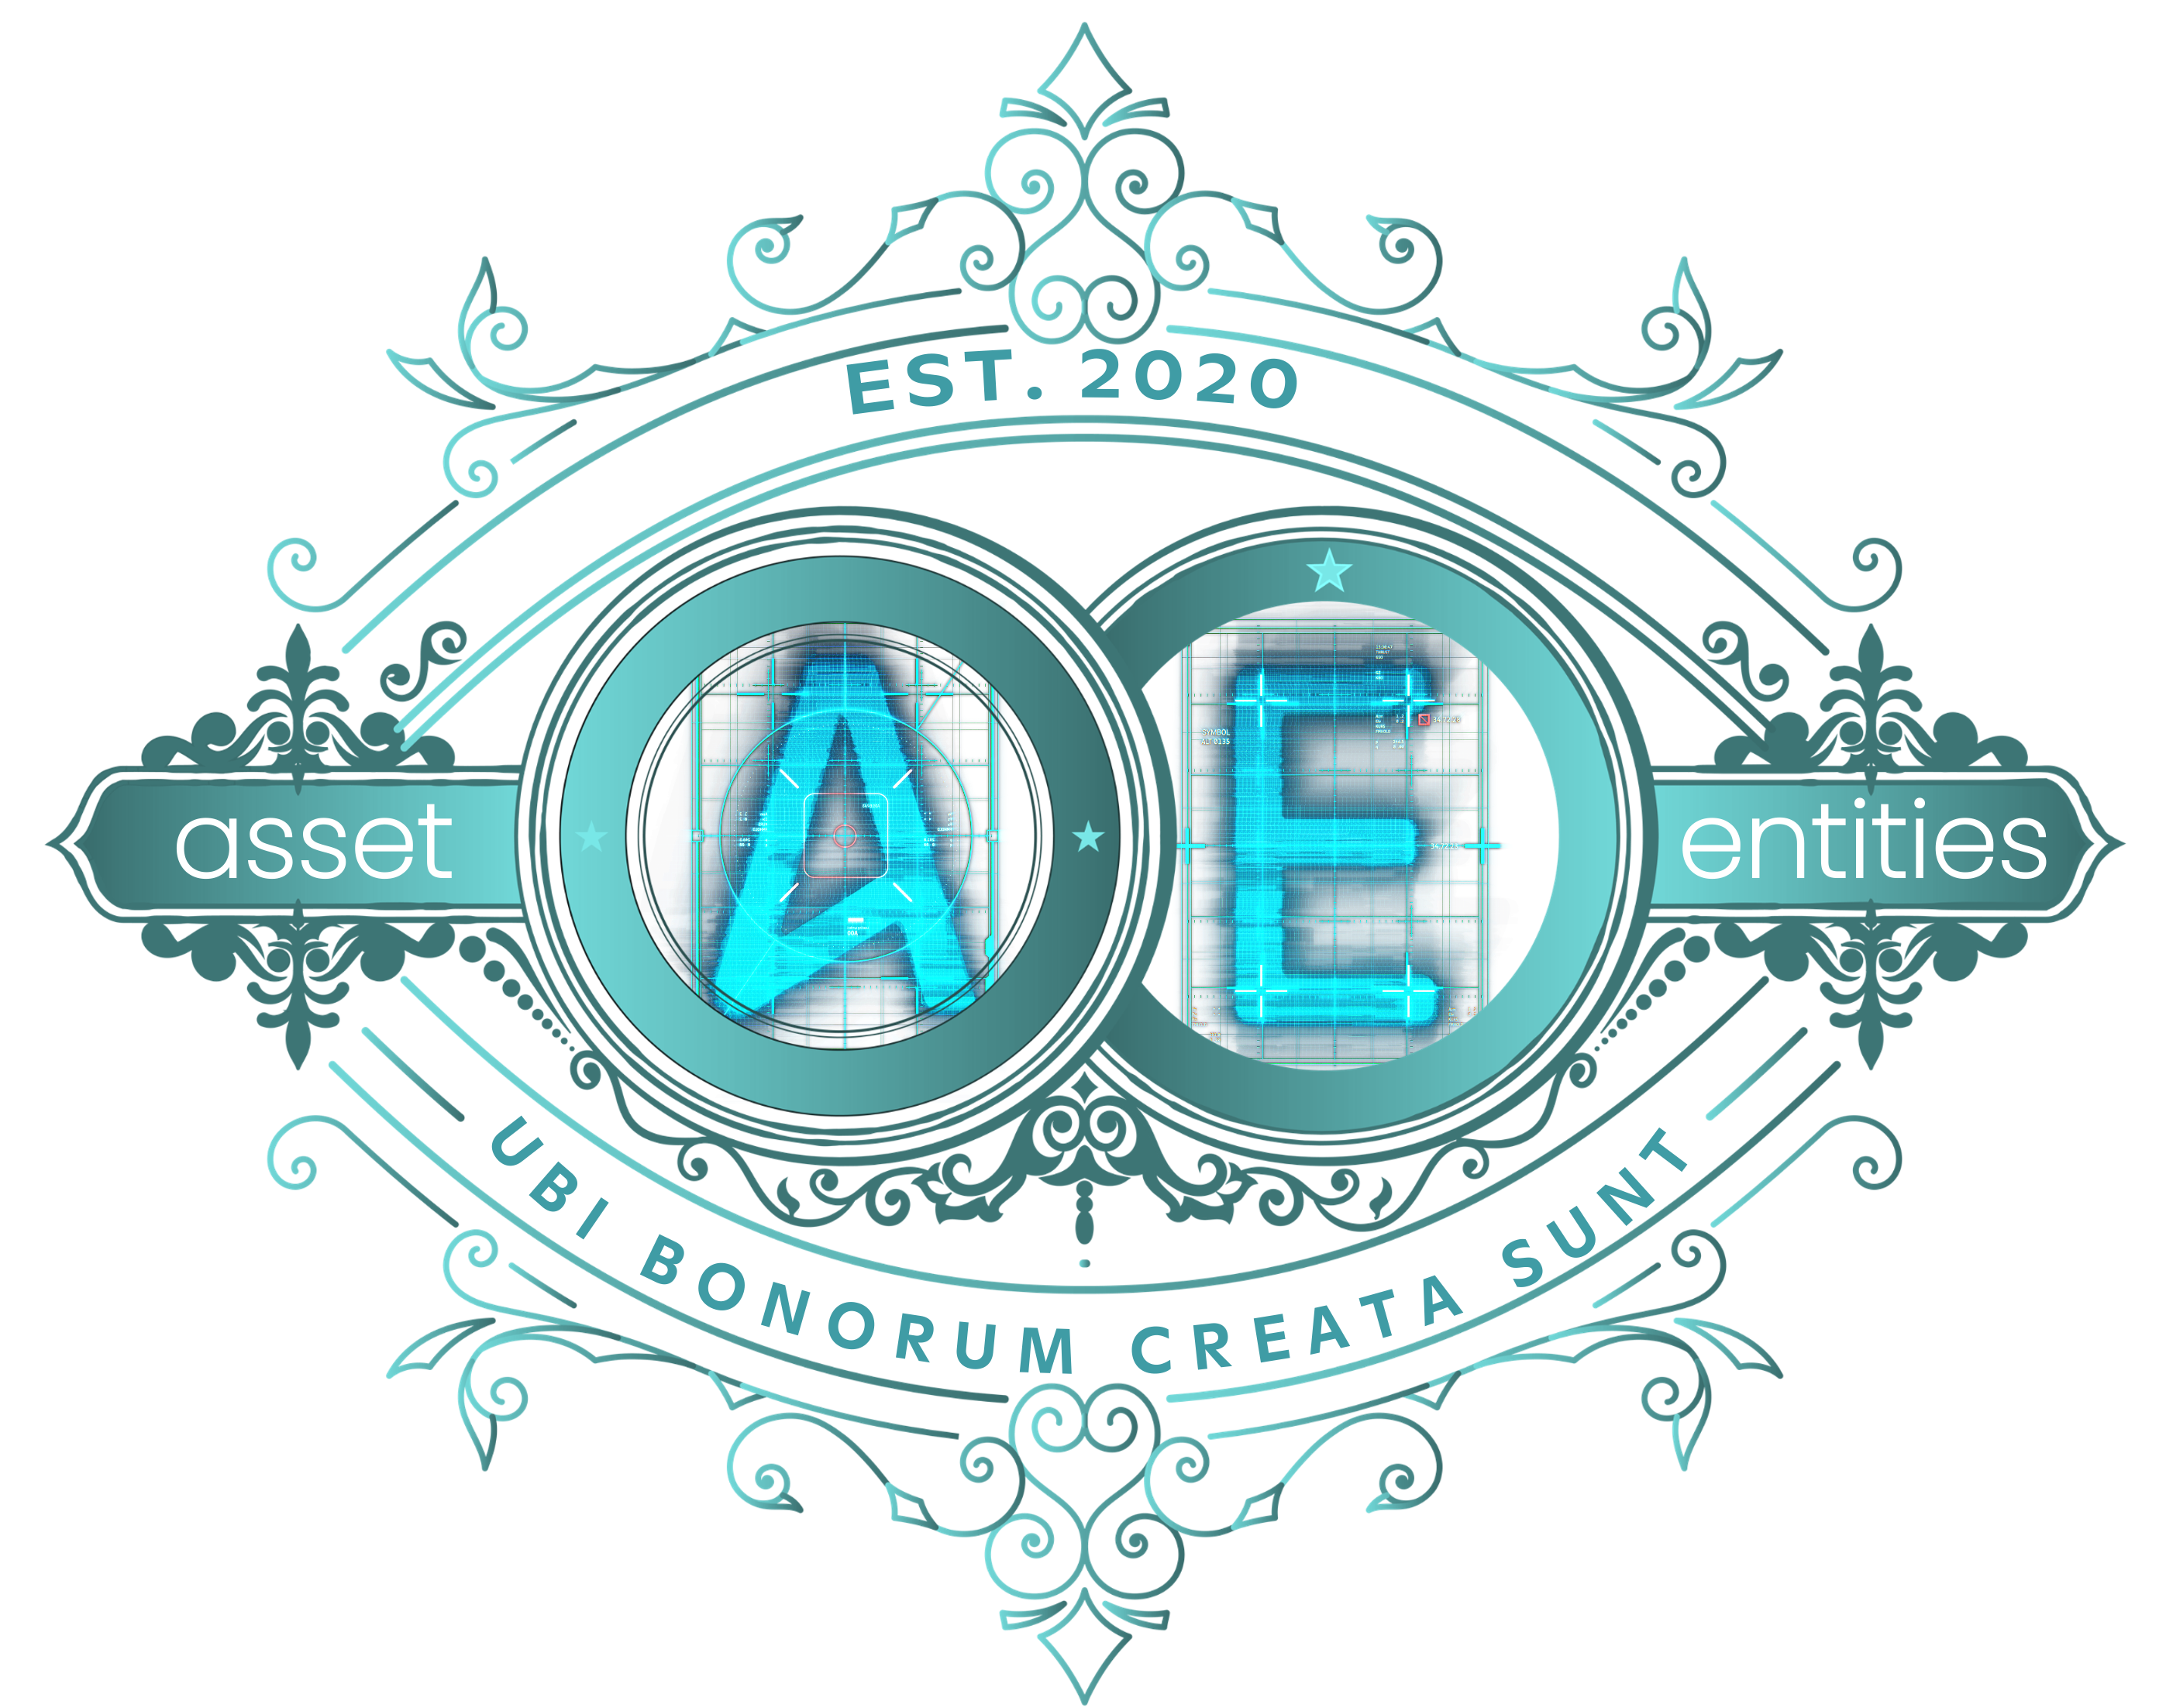 asset entities emblem